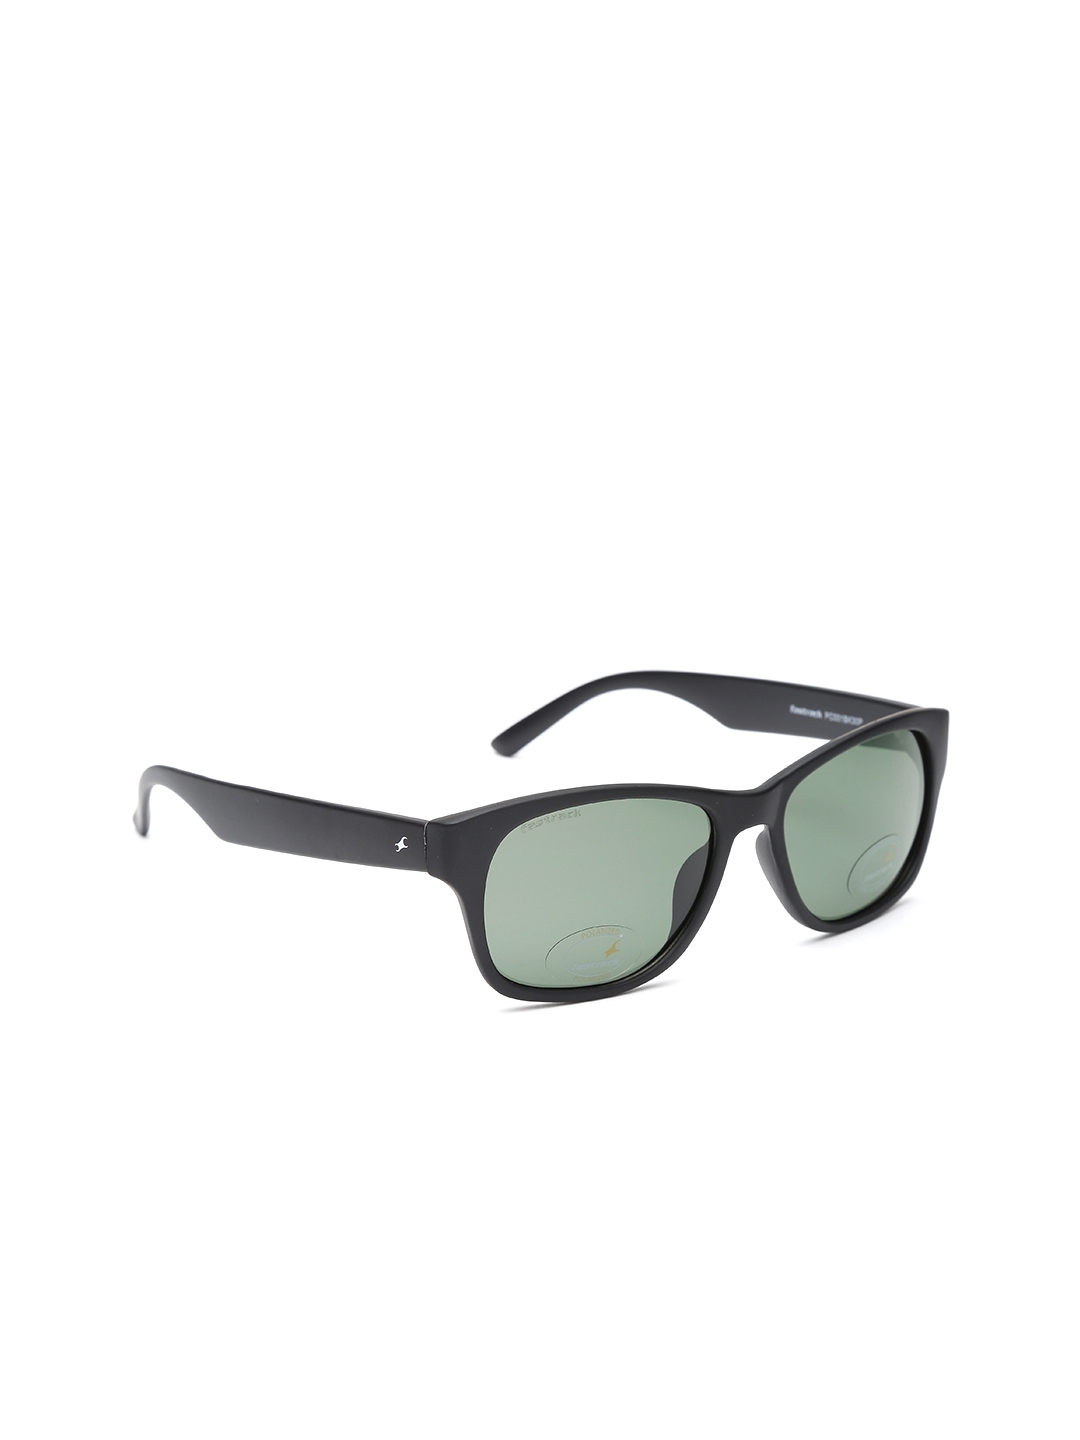 Buy Online Black Wayfarer Rimmed Sunglasses From Fastrack - P407Sl2 | Fastrack  Eyewear